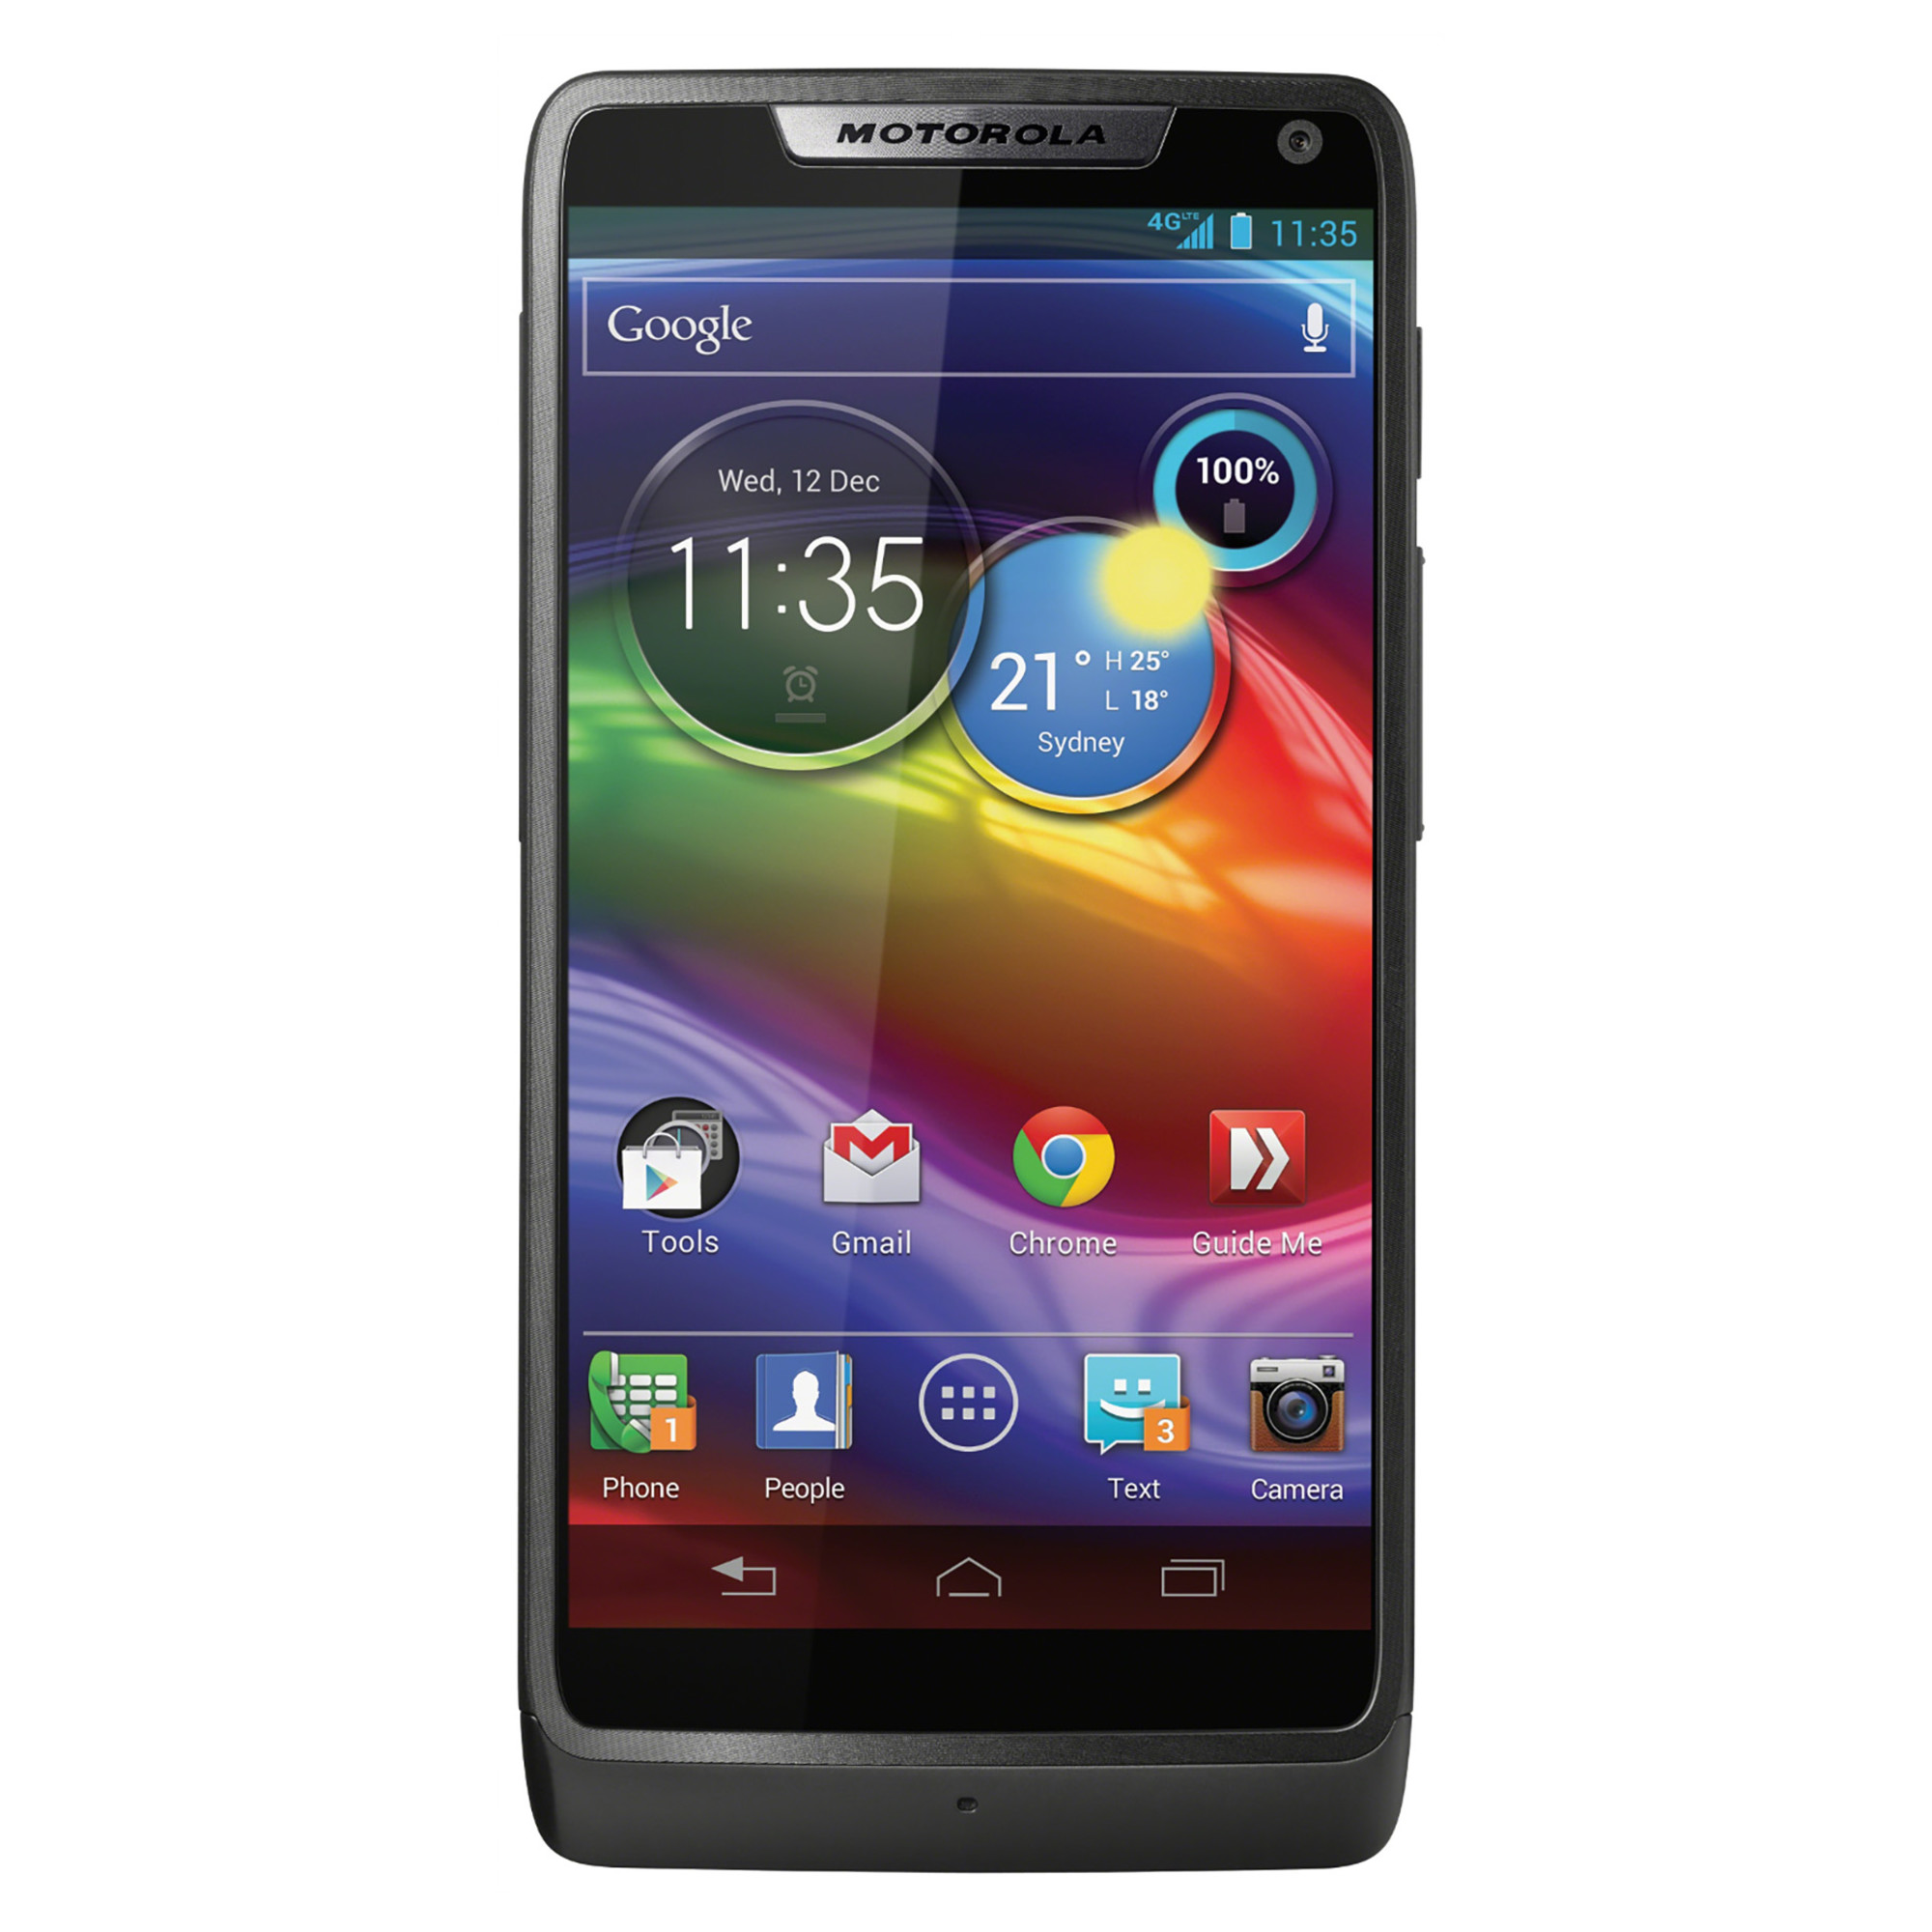 Motorola DROID RAZR M XT907 Verizon 4G LTE Android Phone w/ 8MP Camera